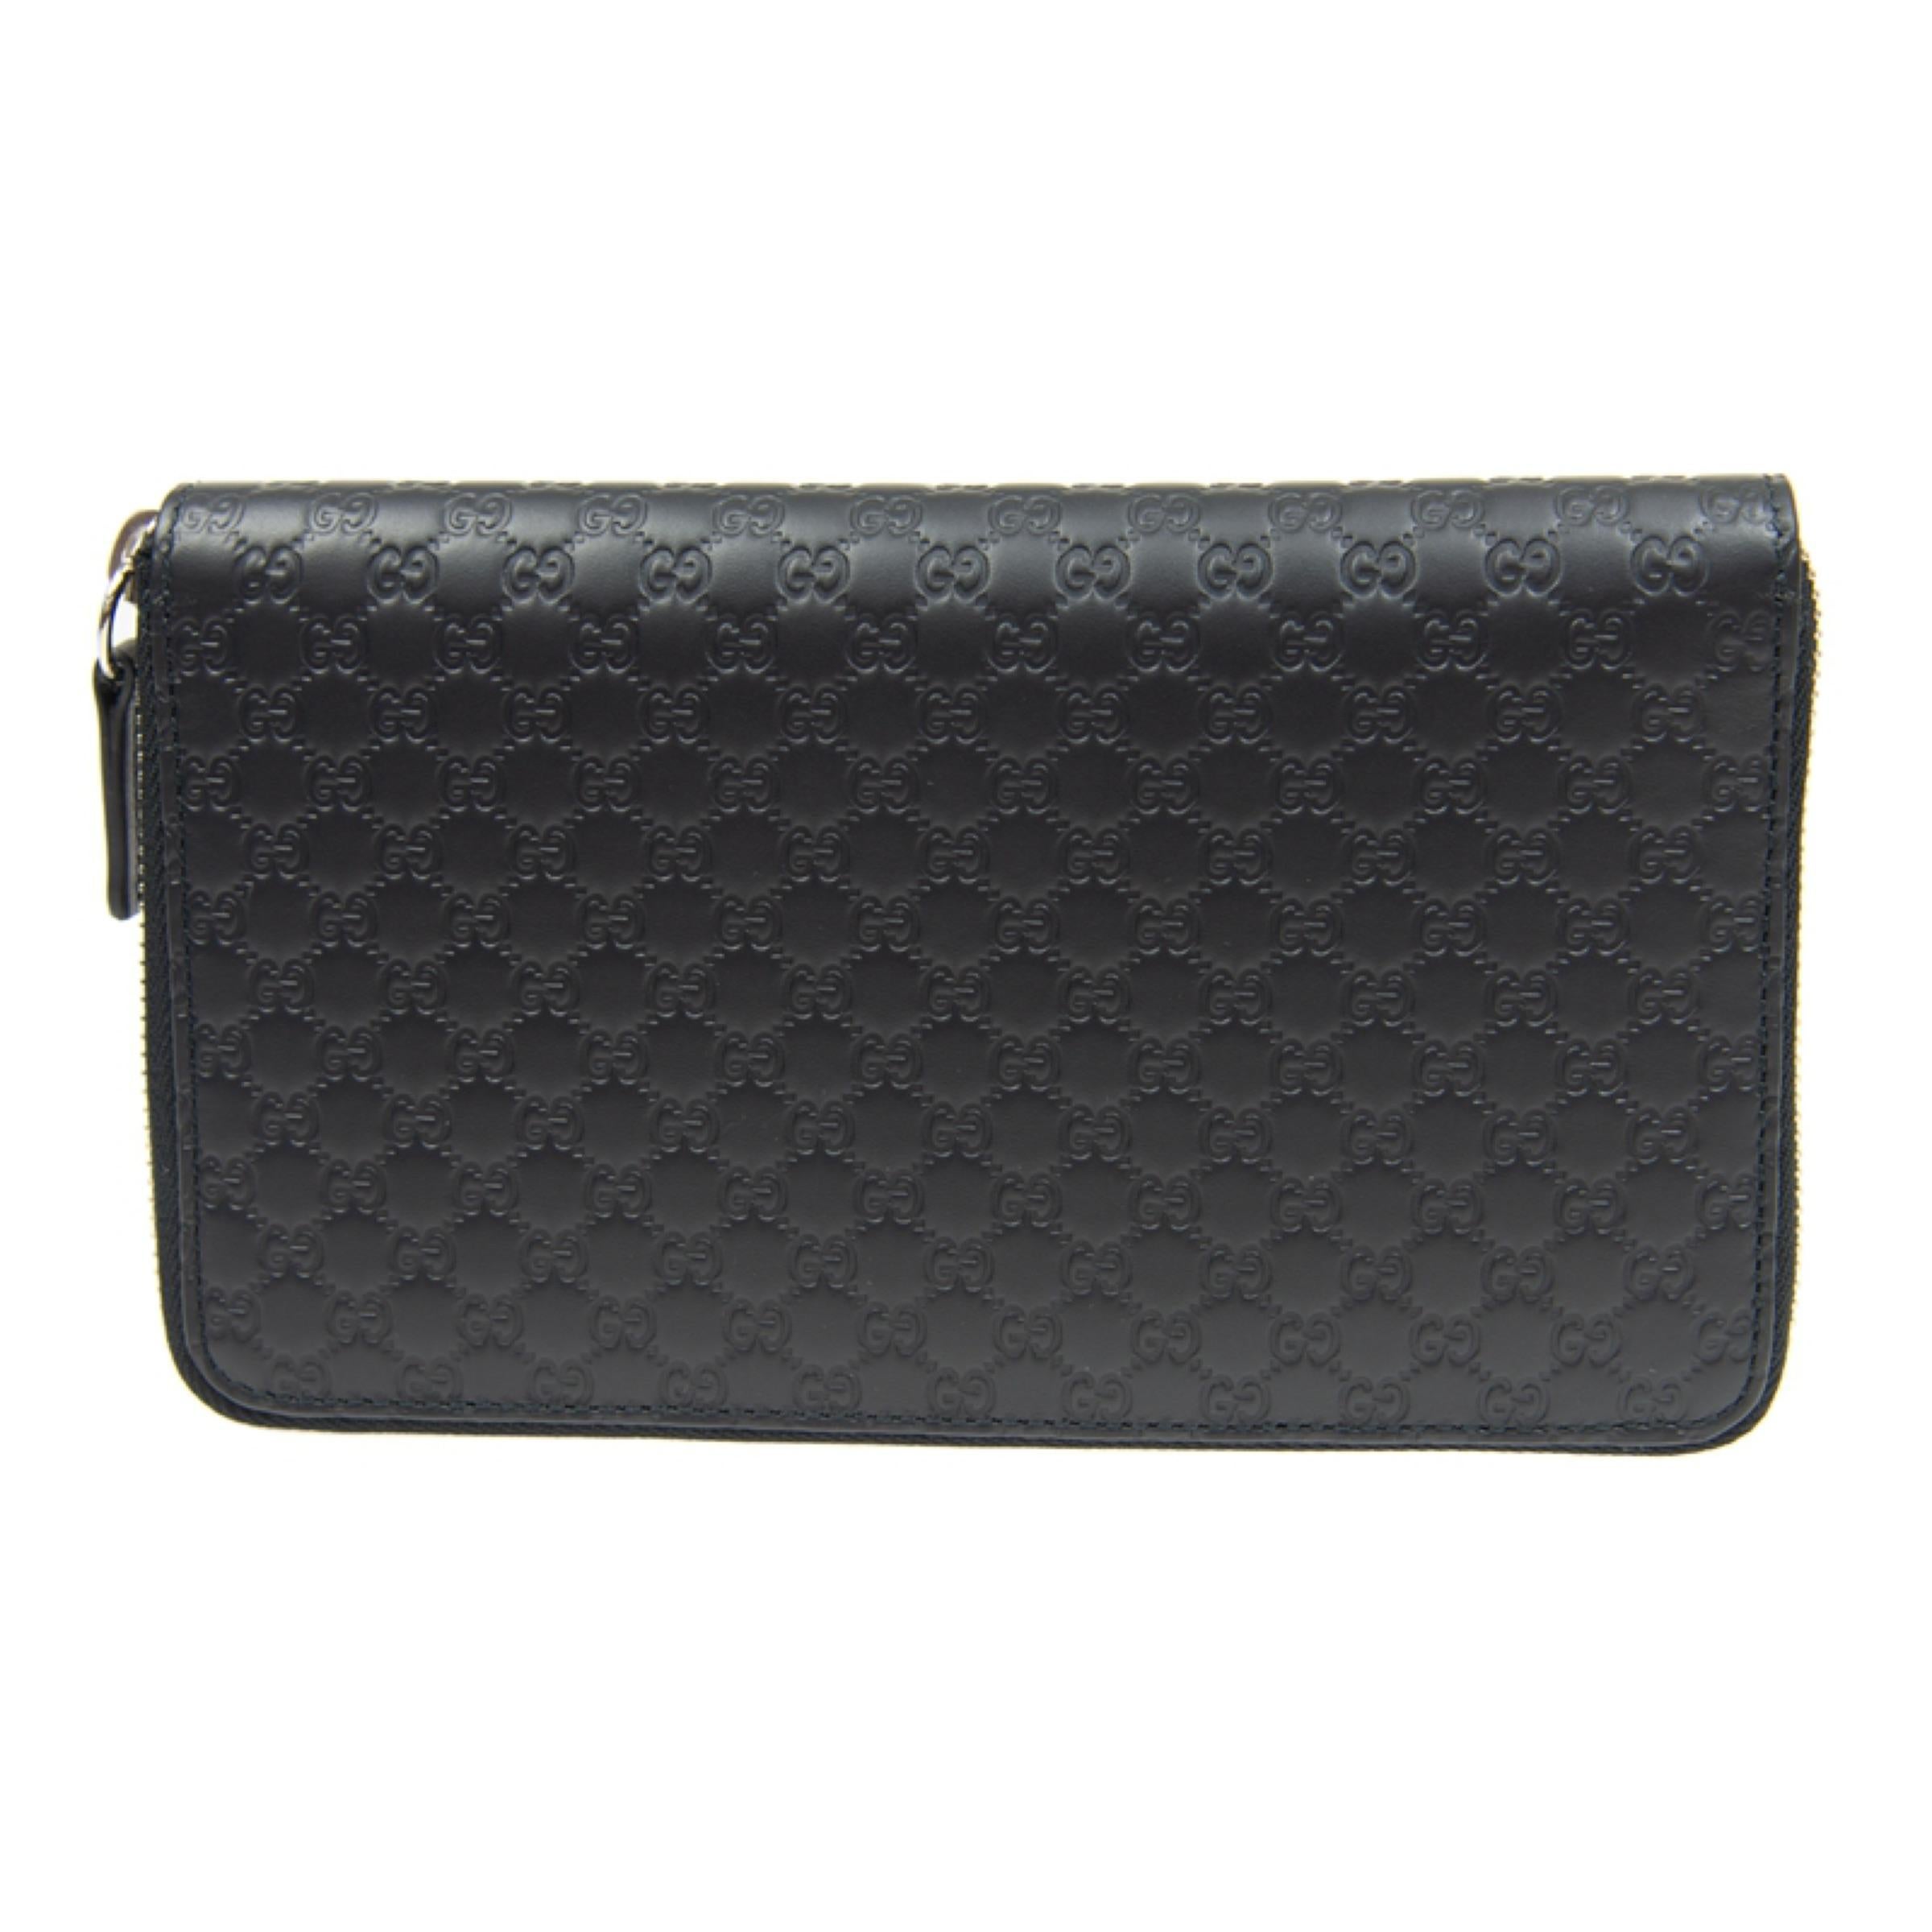 NEW Gucci Black GG Guccissima Monogram Leather Zip Around Clutch Bag For Sale 1